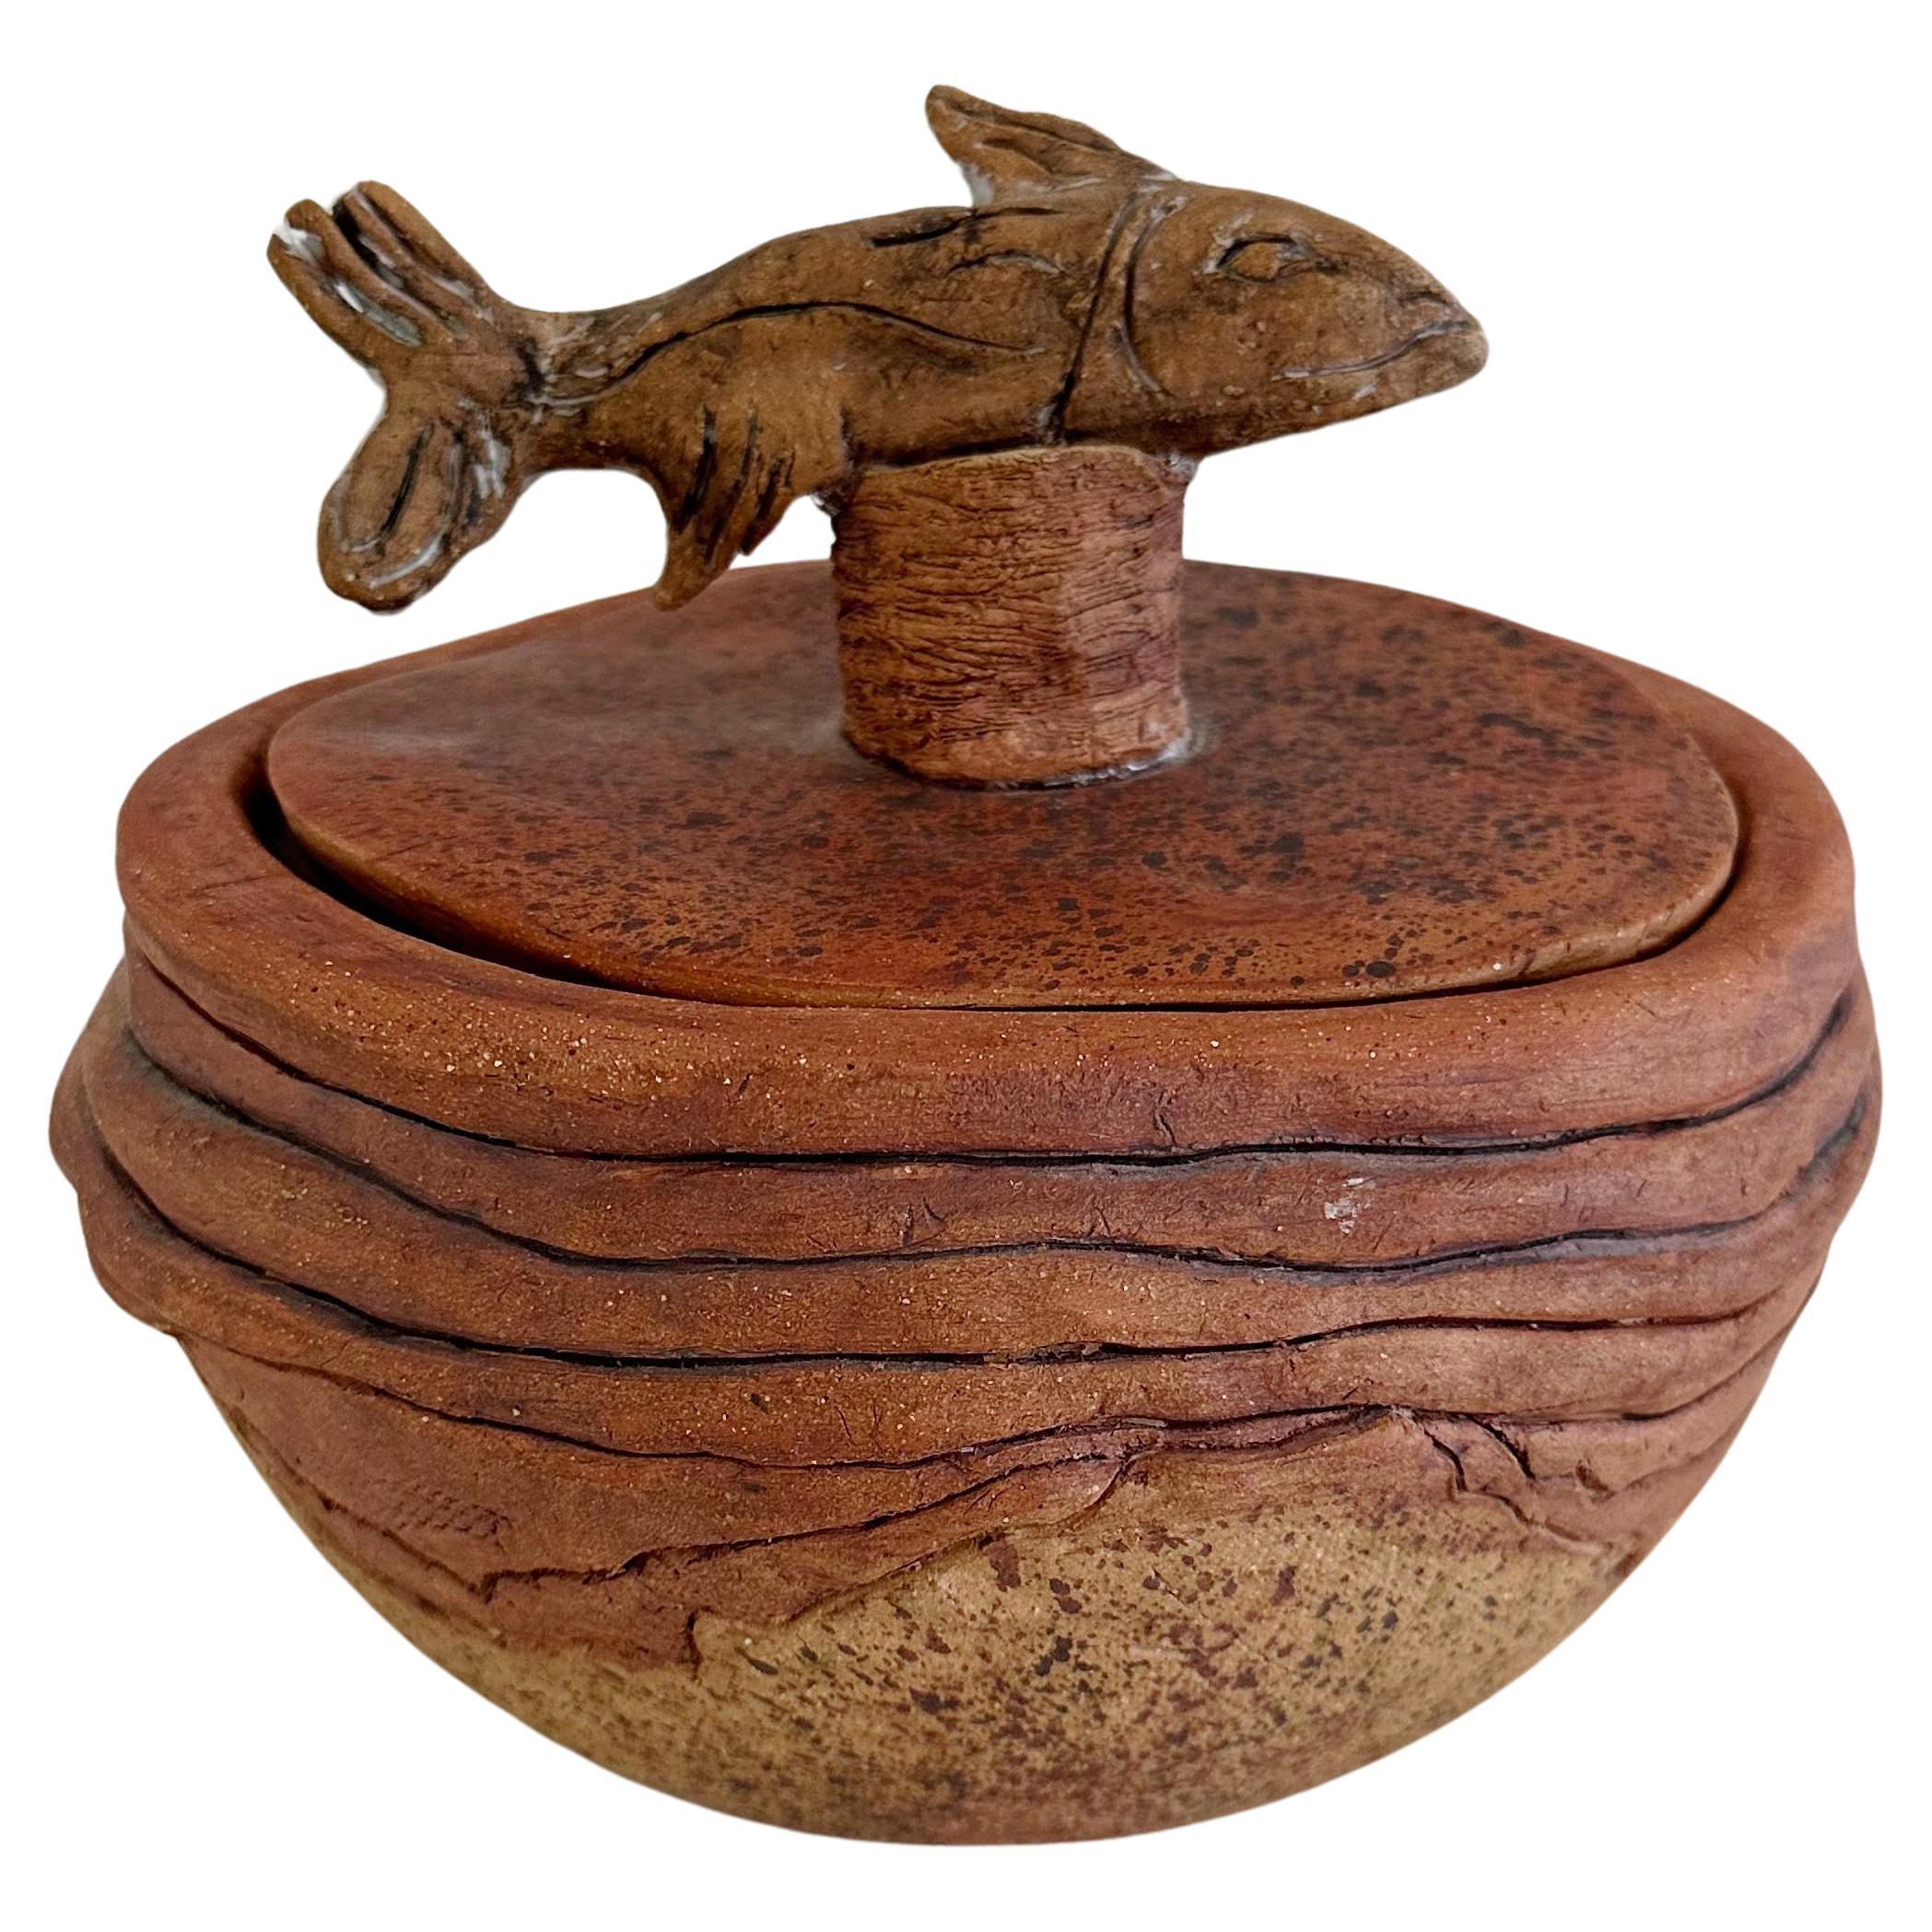 Lidded "Fish" Studio Pottery Vessel by Sculptor Ruth Joffa (1920 - 2017)